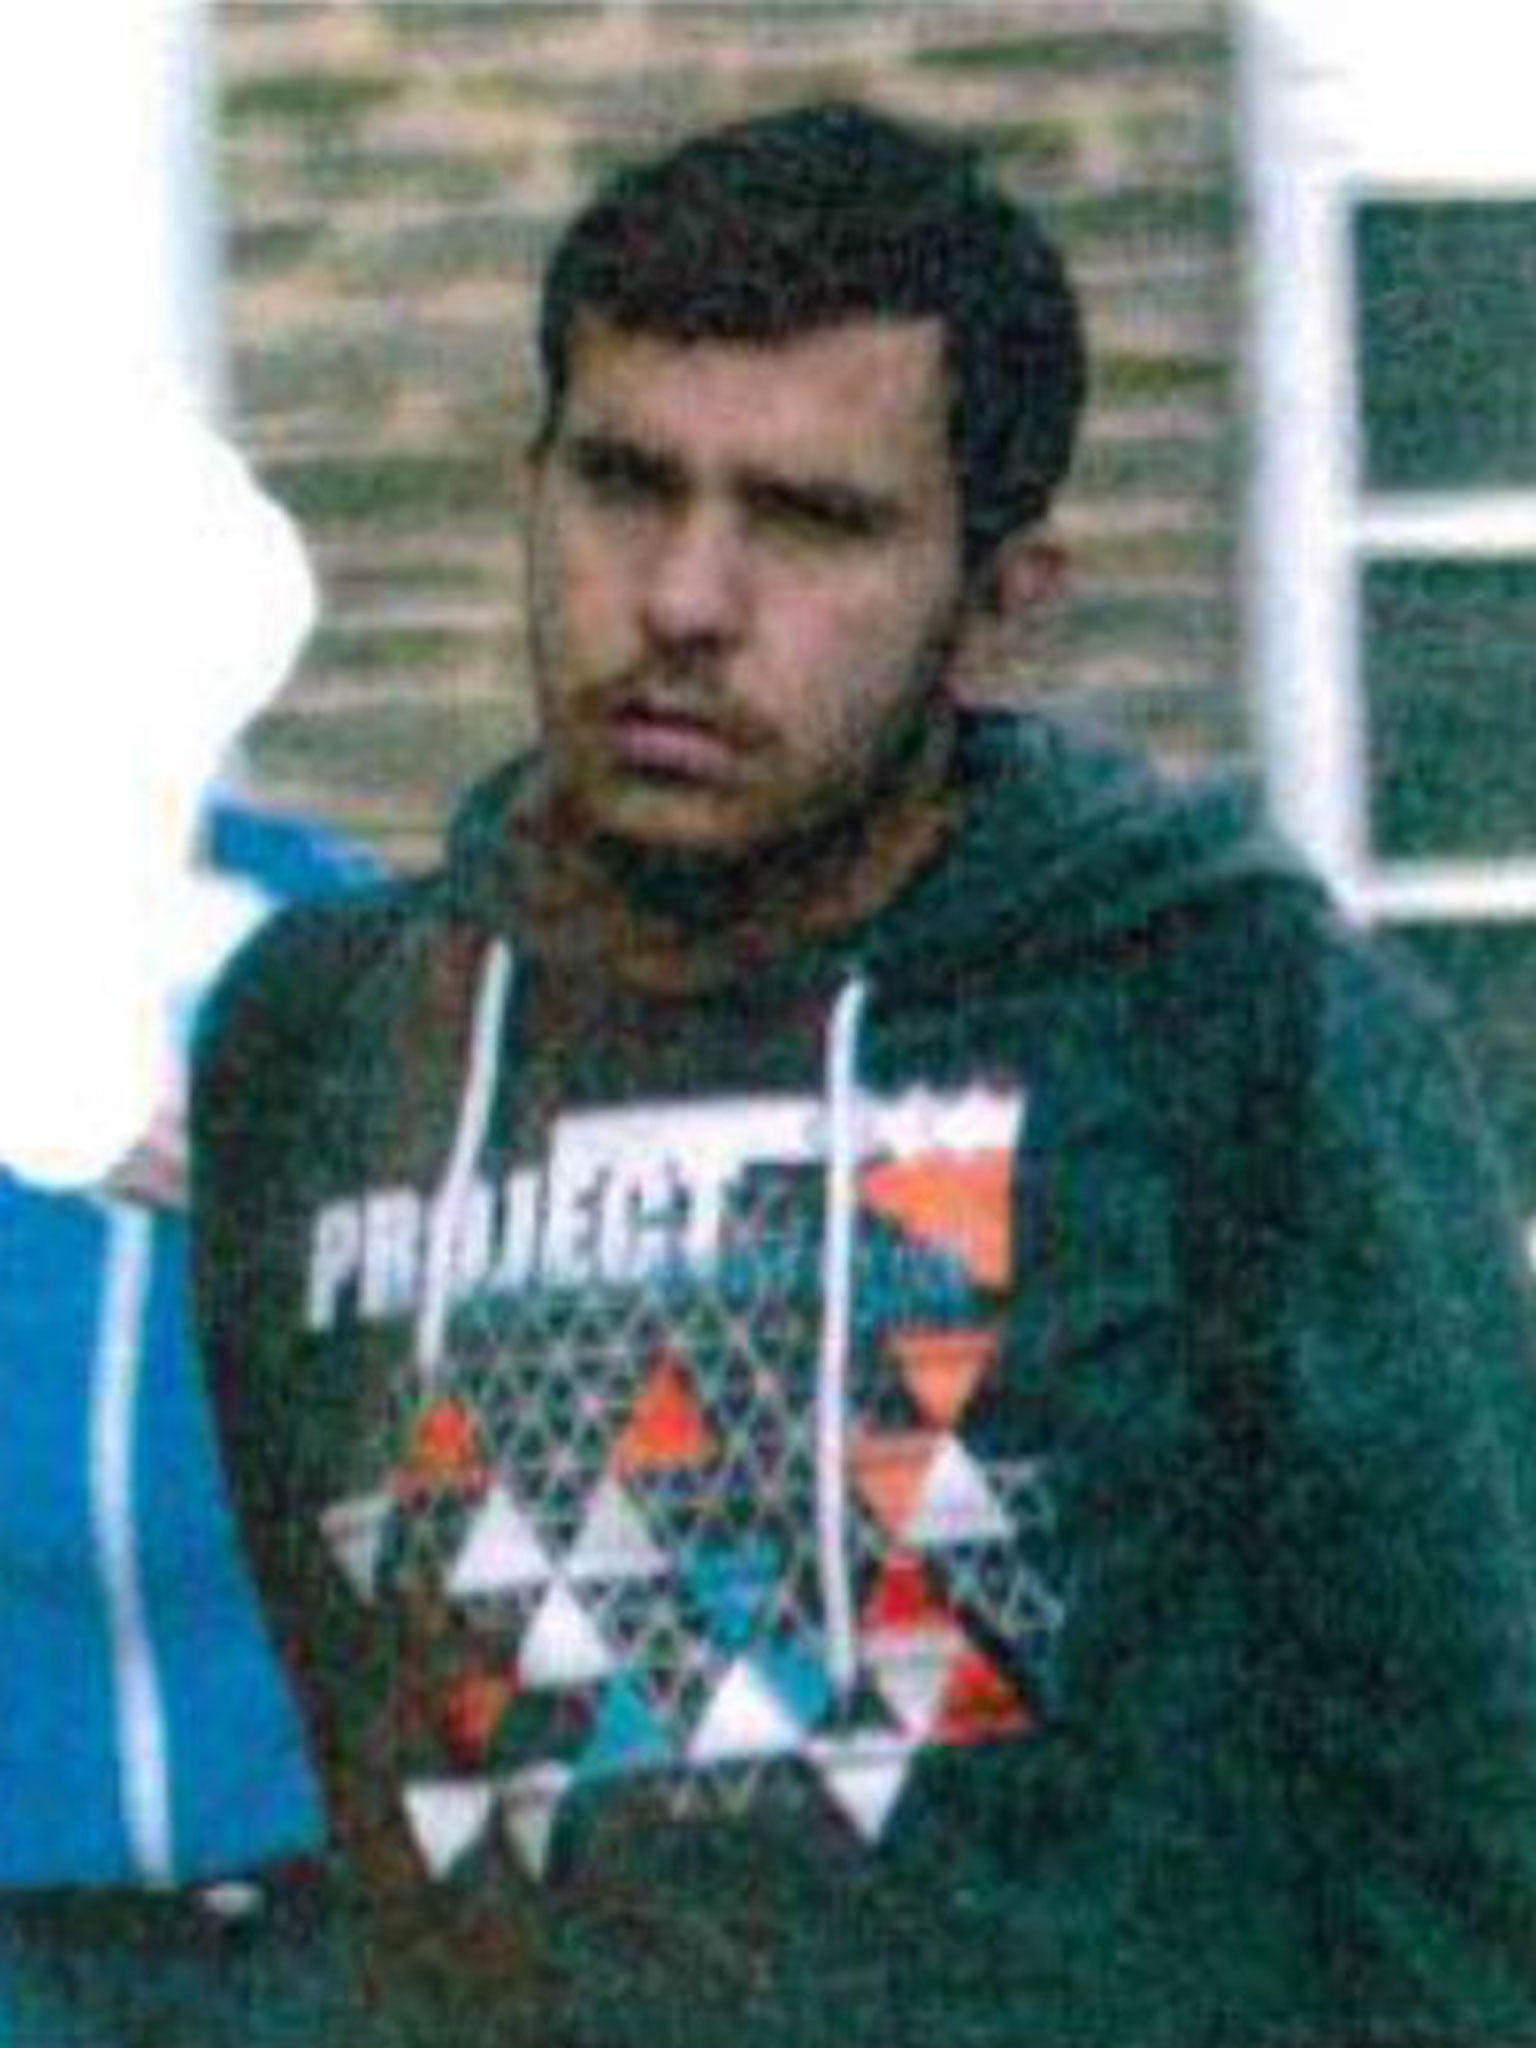 Jaber al-Bakr, a Syrian asylum seeker wanted by German police on suspicion of planning a terror attack